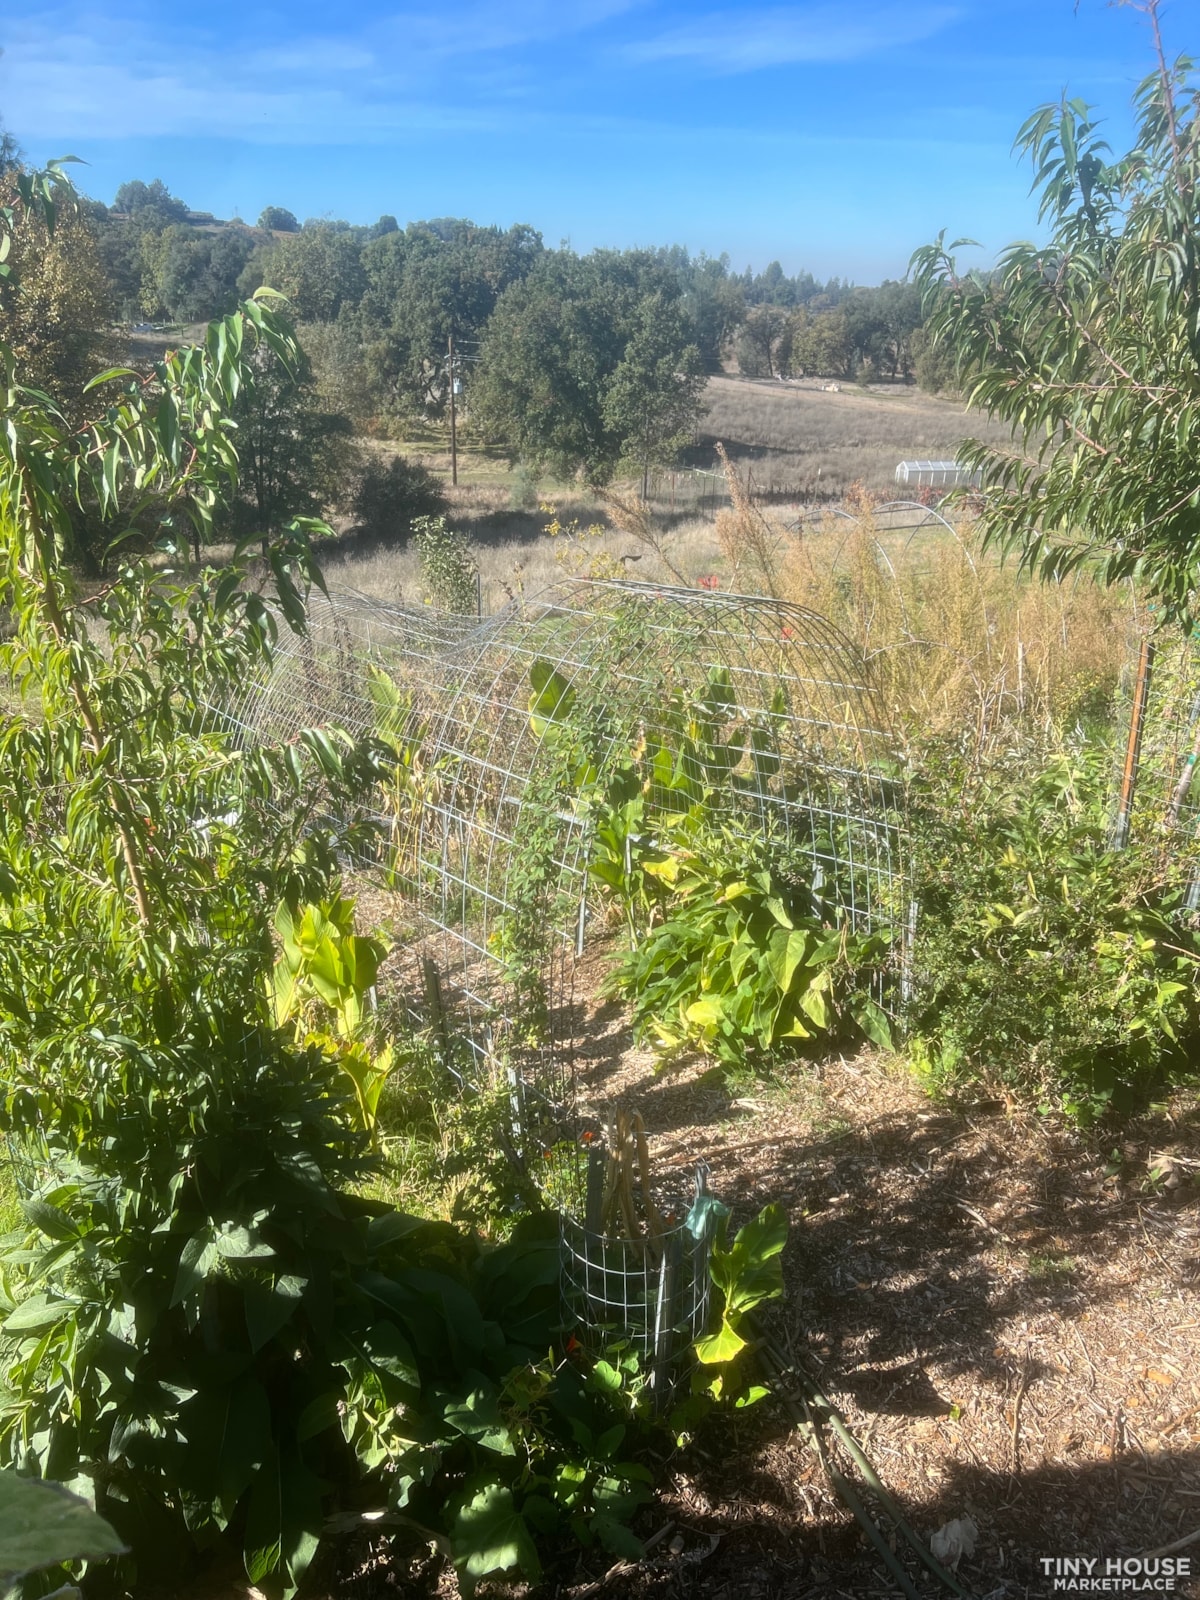 Sustainable Vineyard and Permaculture Community in Sierra Foothills - Slide 2